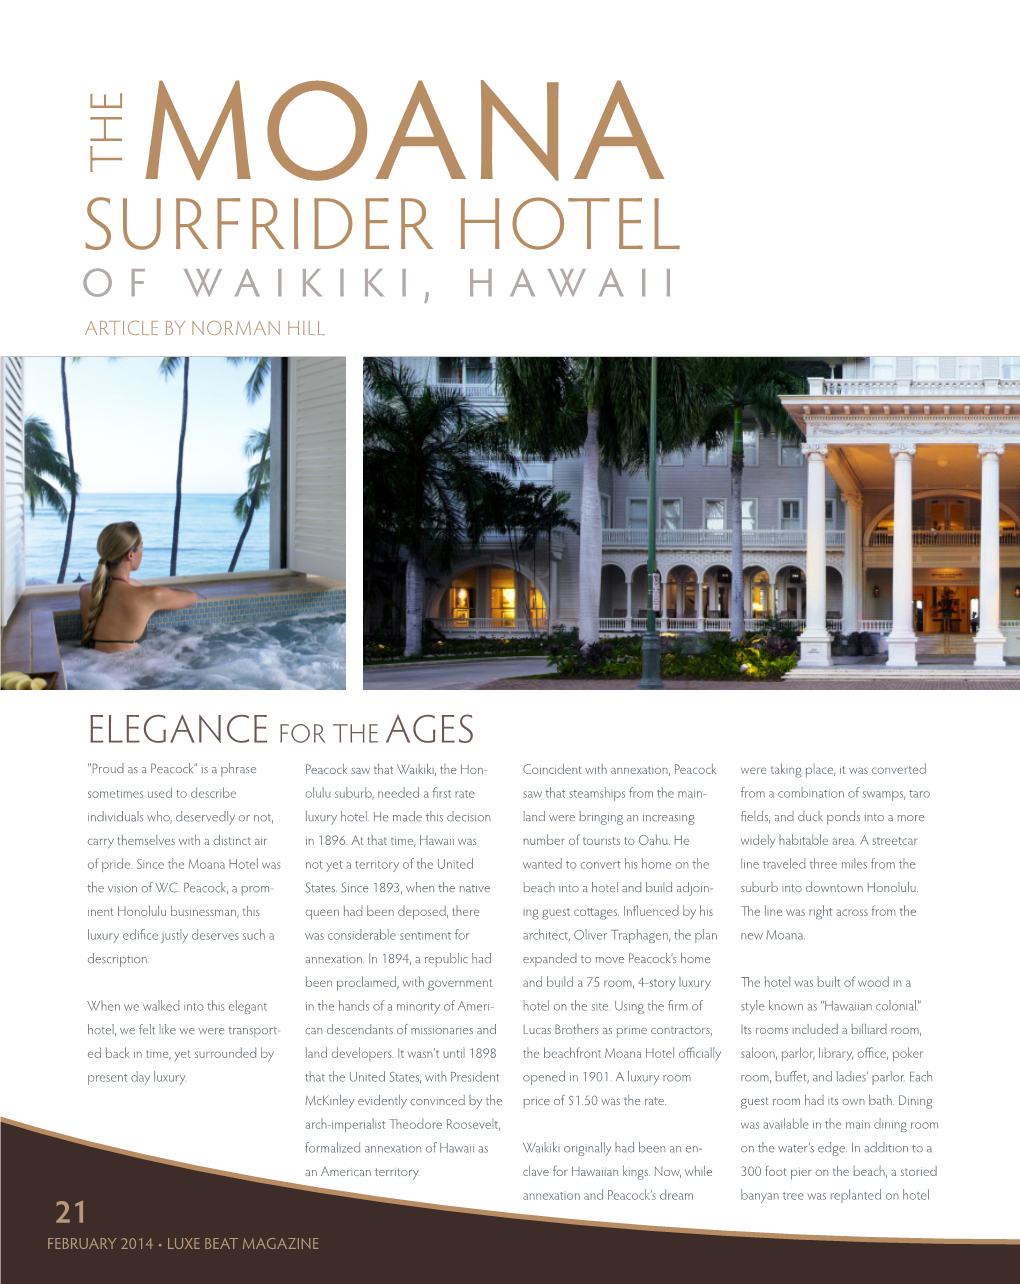 The Moana Surfrider Hotel of Waikiki, Hawaii Article by Norman Hill